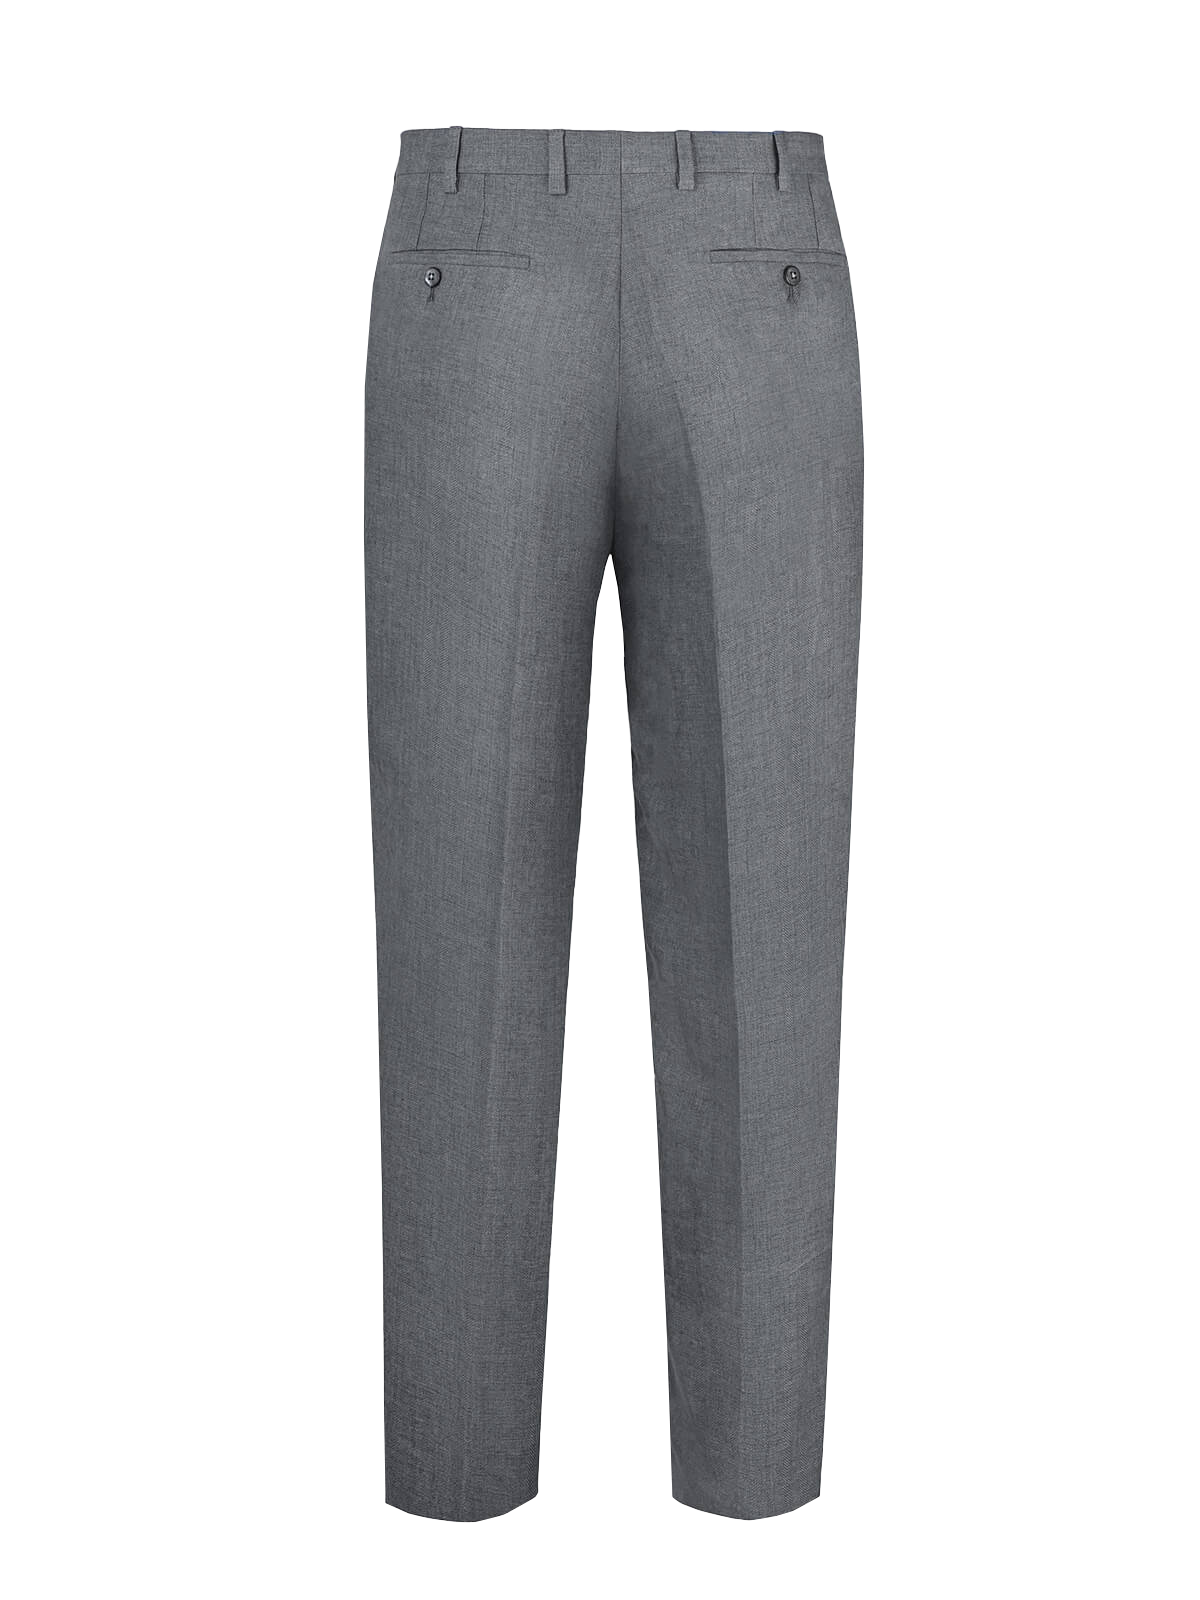 Pantalone Brezza 100% capri for man linen dark grey trouser back